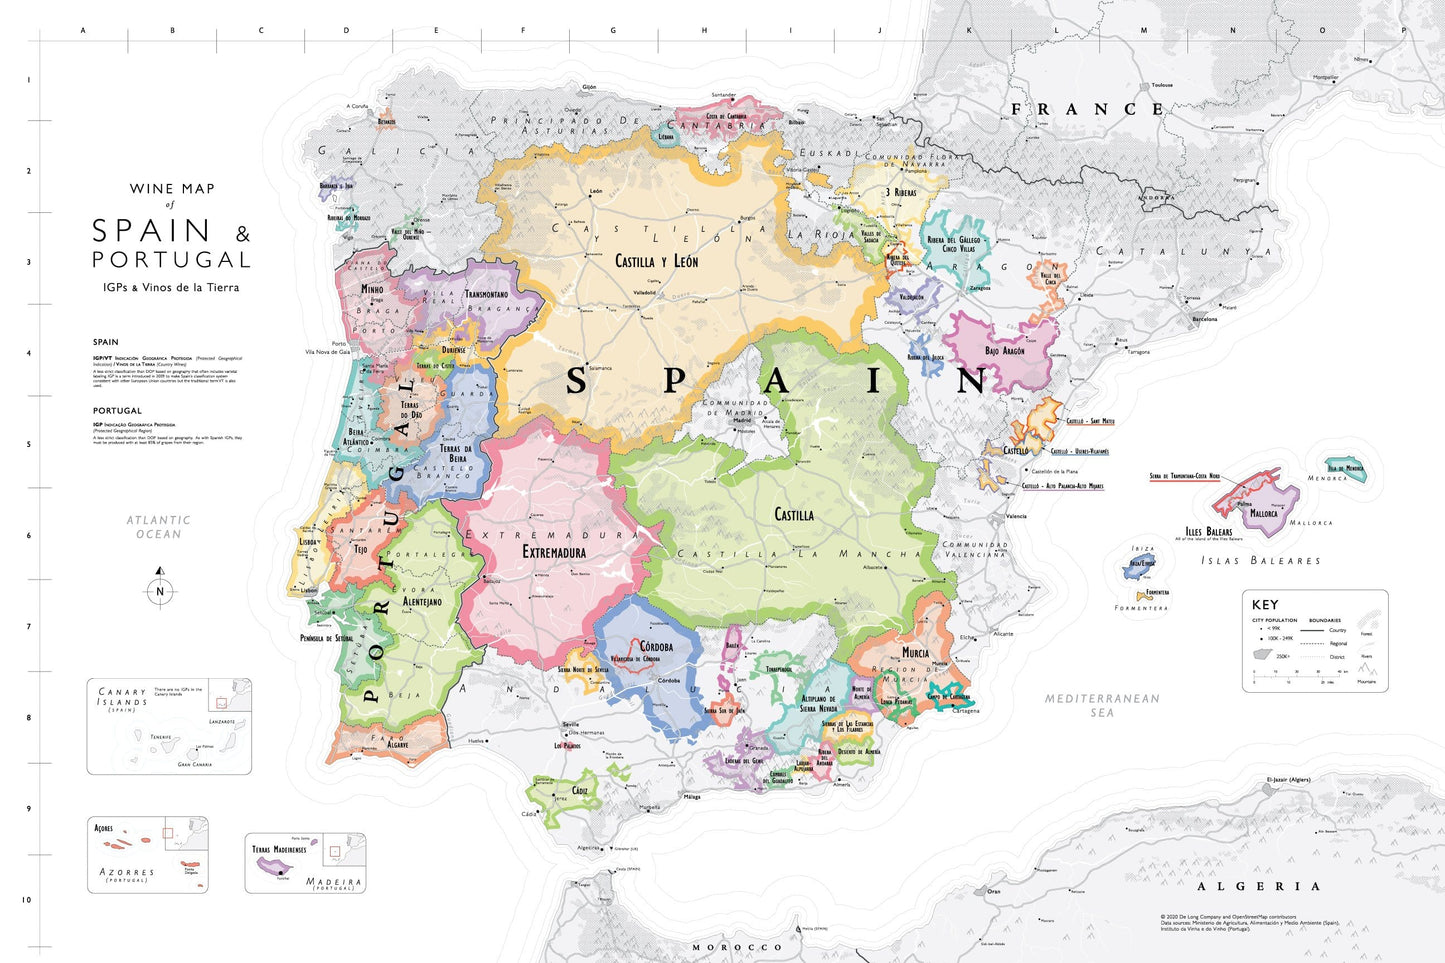 Wine Map of Spain & Portugal - Bookshelf Edition IGP regions